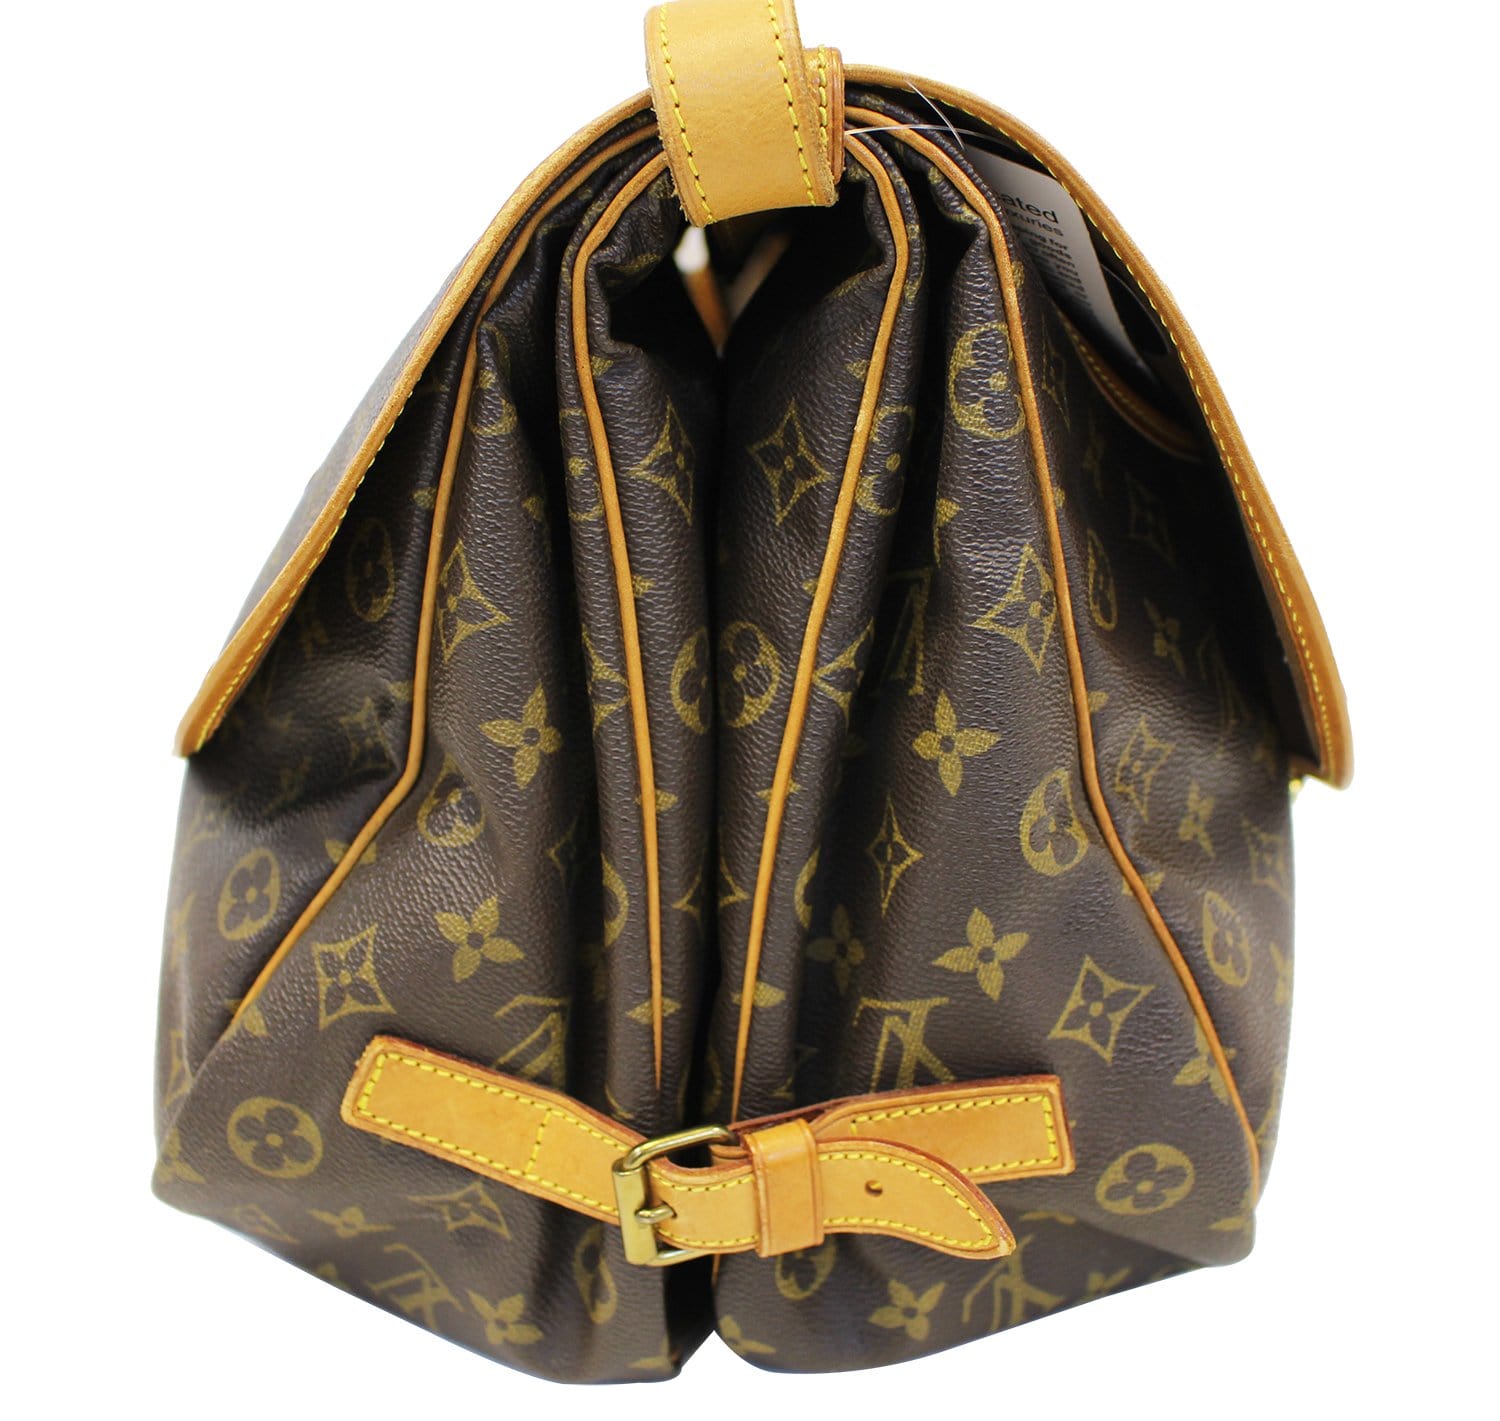 Louis Vuitton 1998 Pre-owned Mini Speedy Handbag - Brown